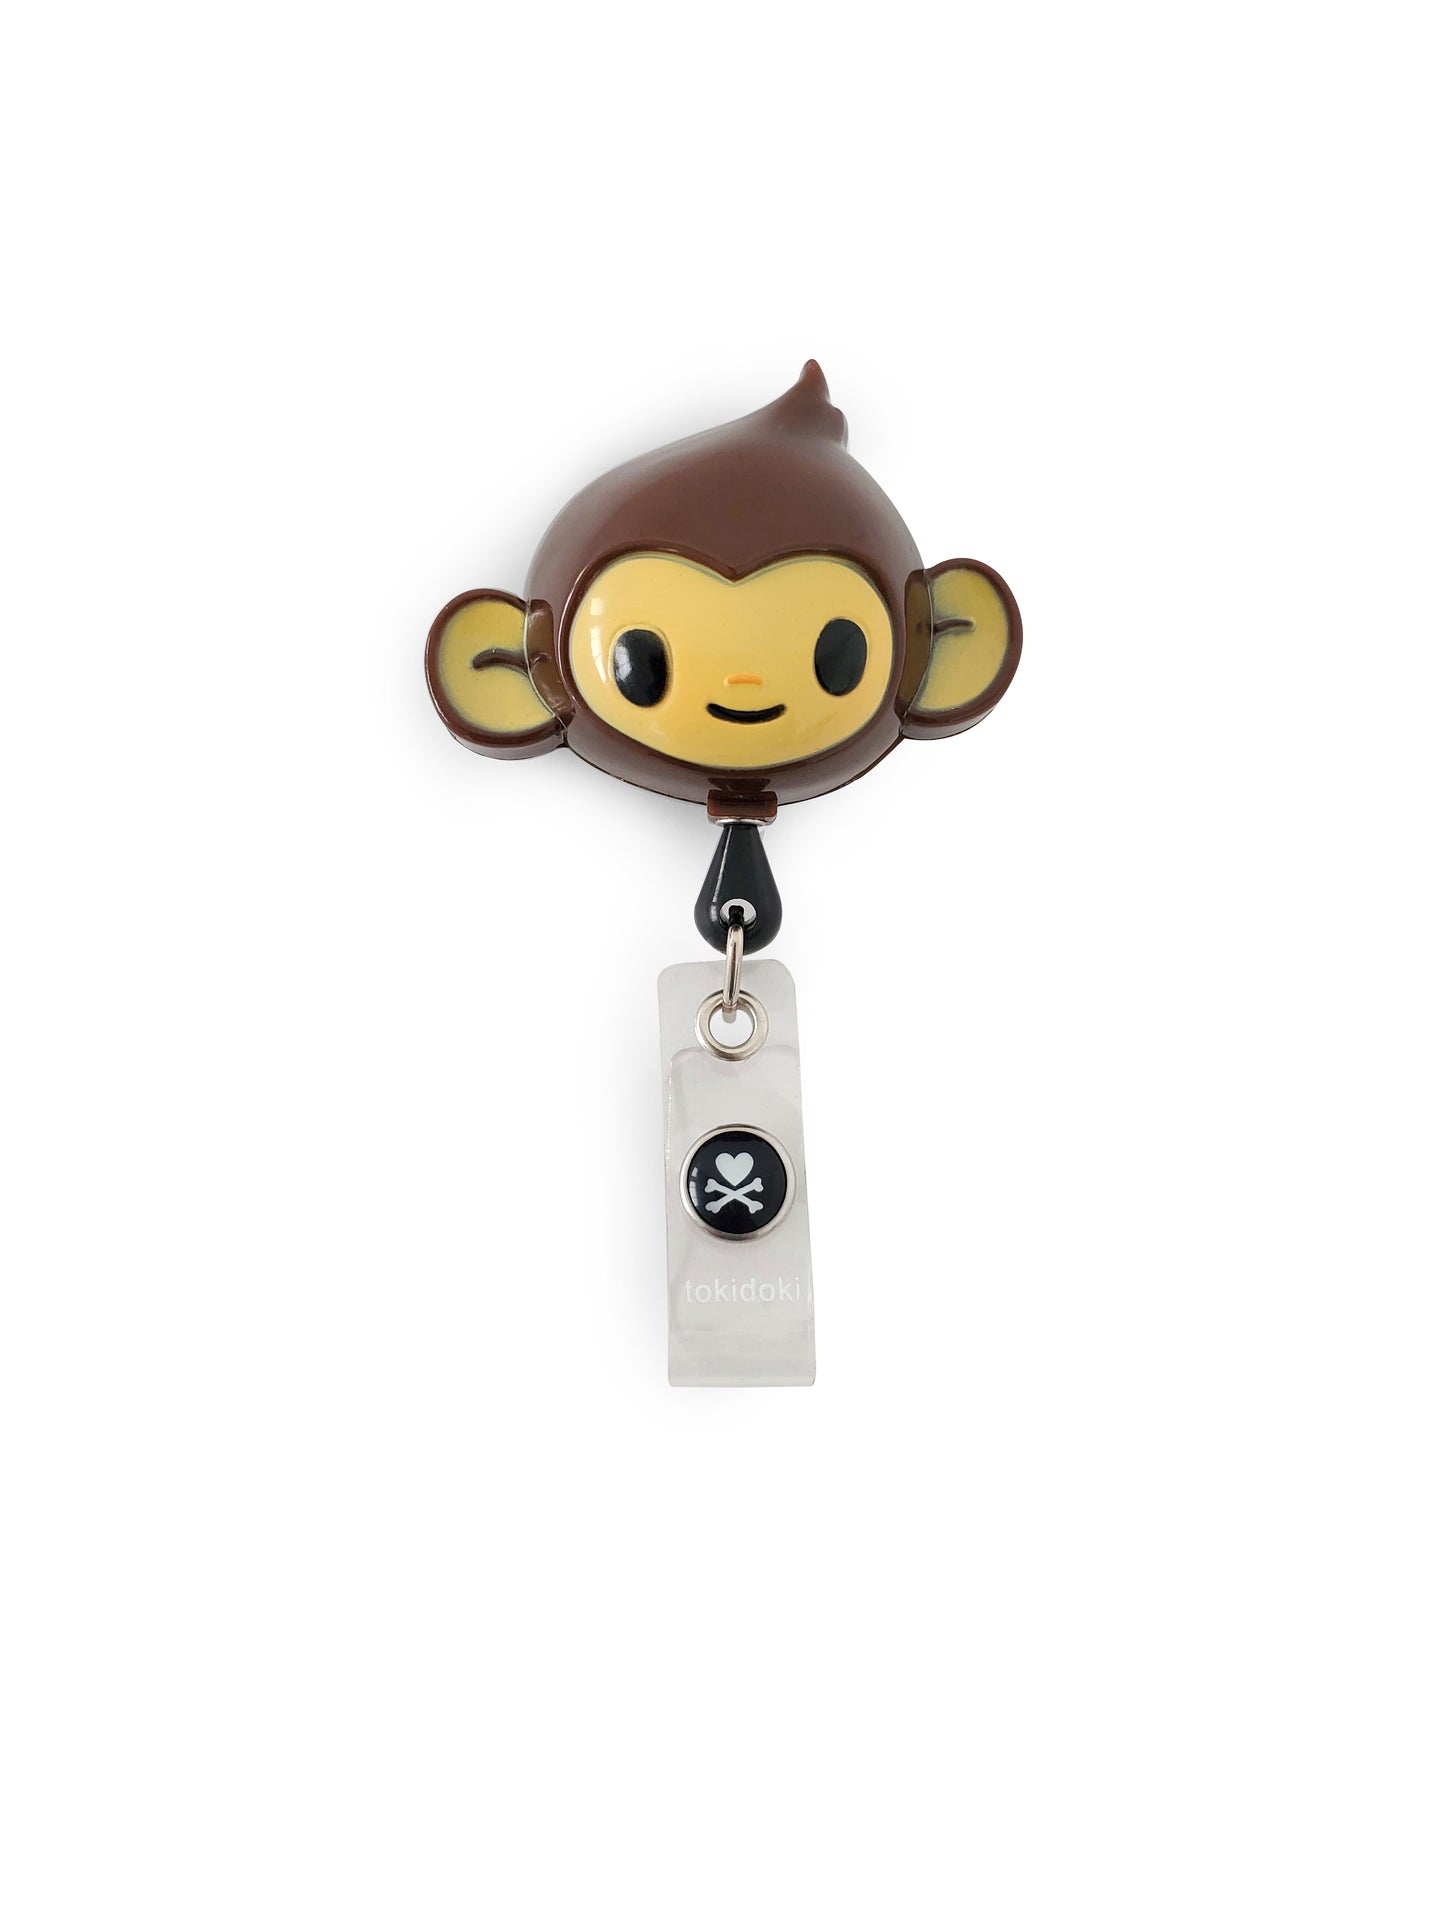 Koi Retractable ID Badge - Tokidoki Monkey